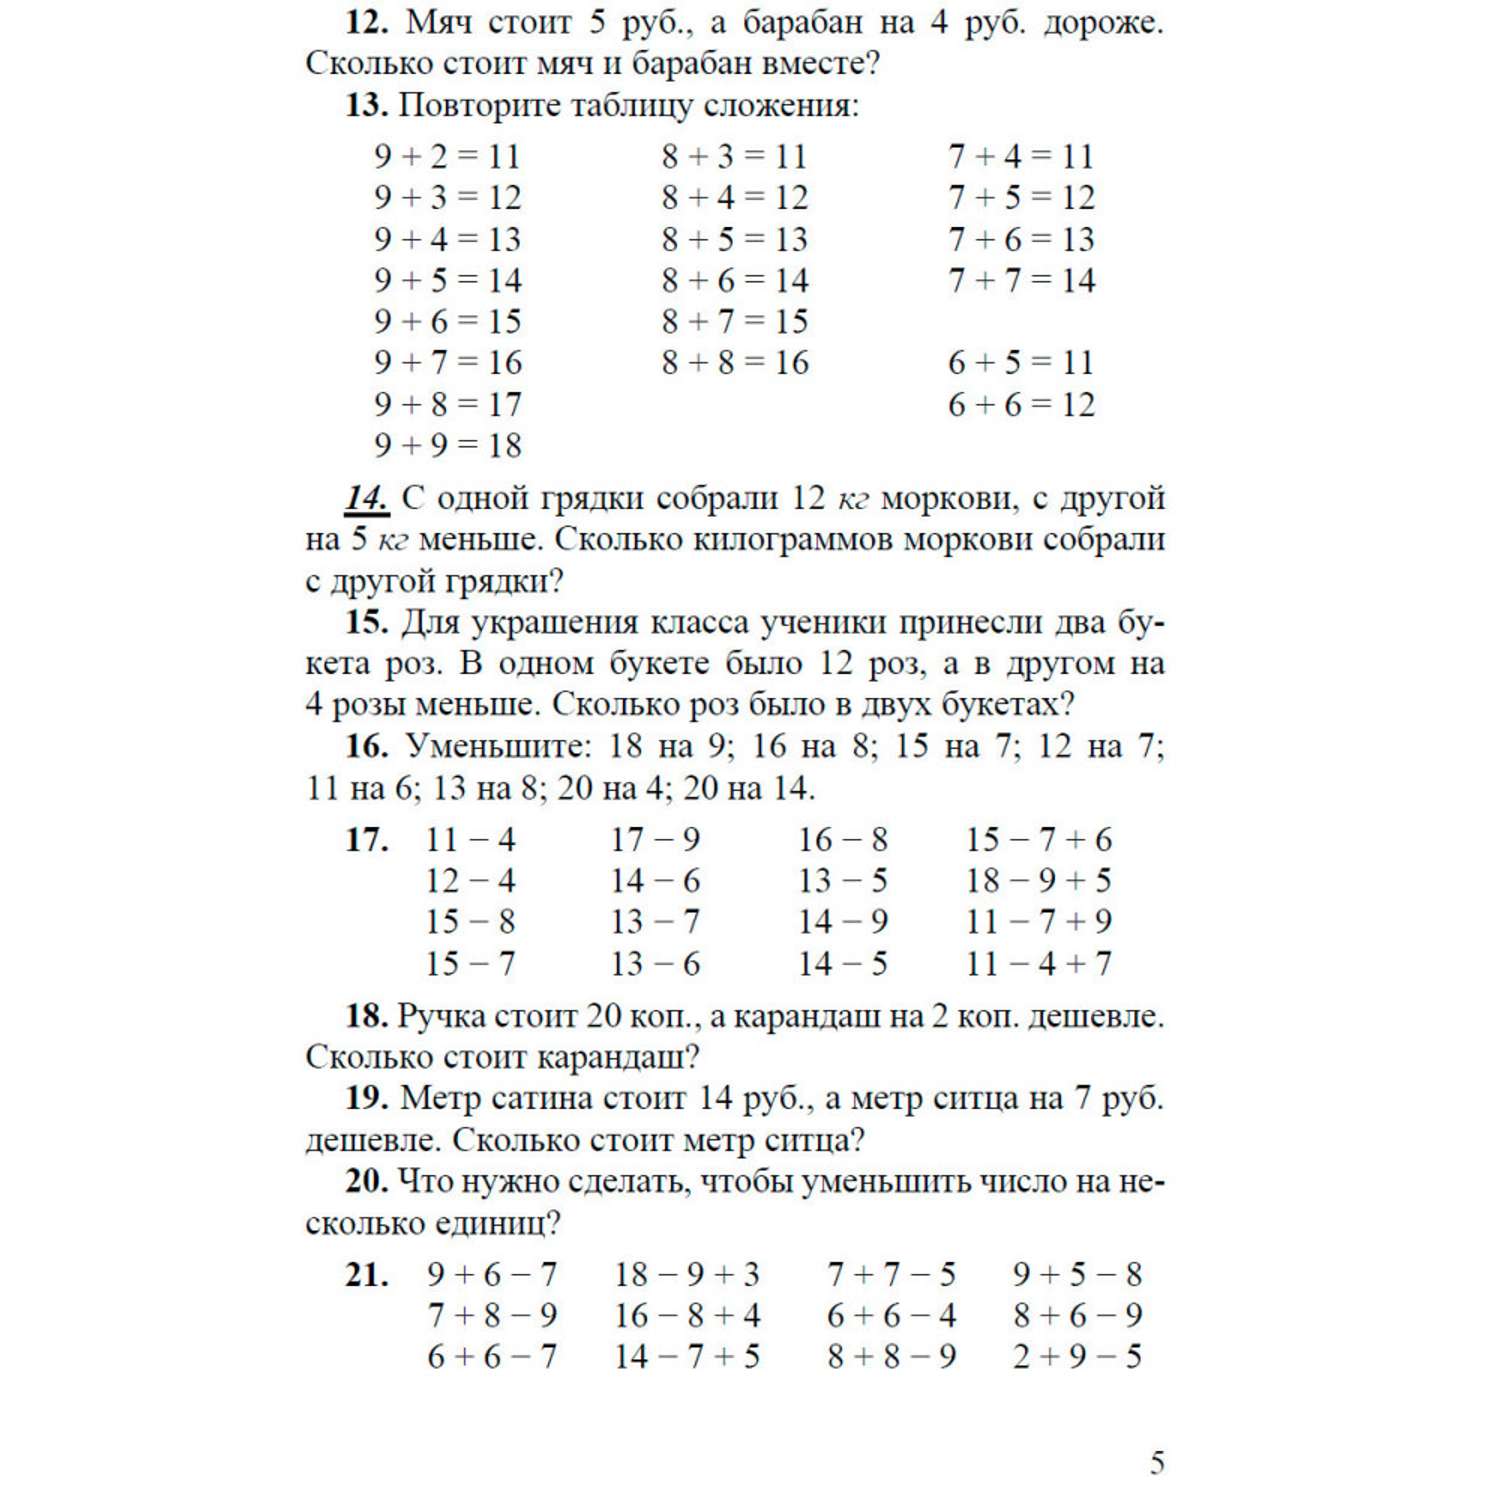 Книга Наше Завтра Арифметика для второго класса. 1957 год - фото 5